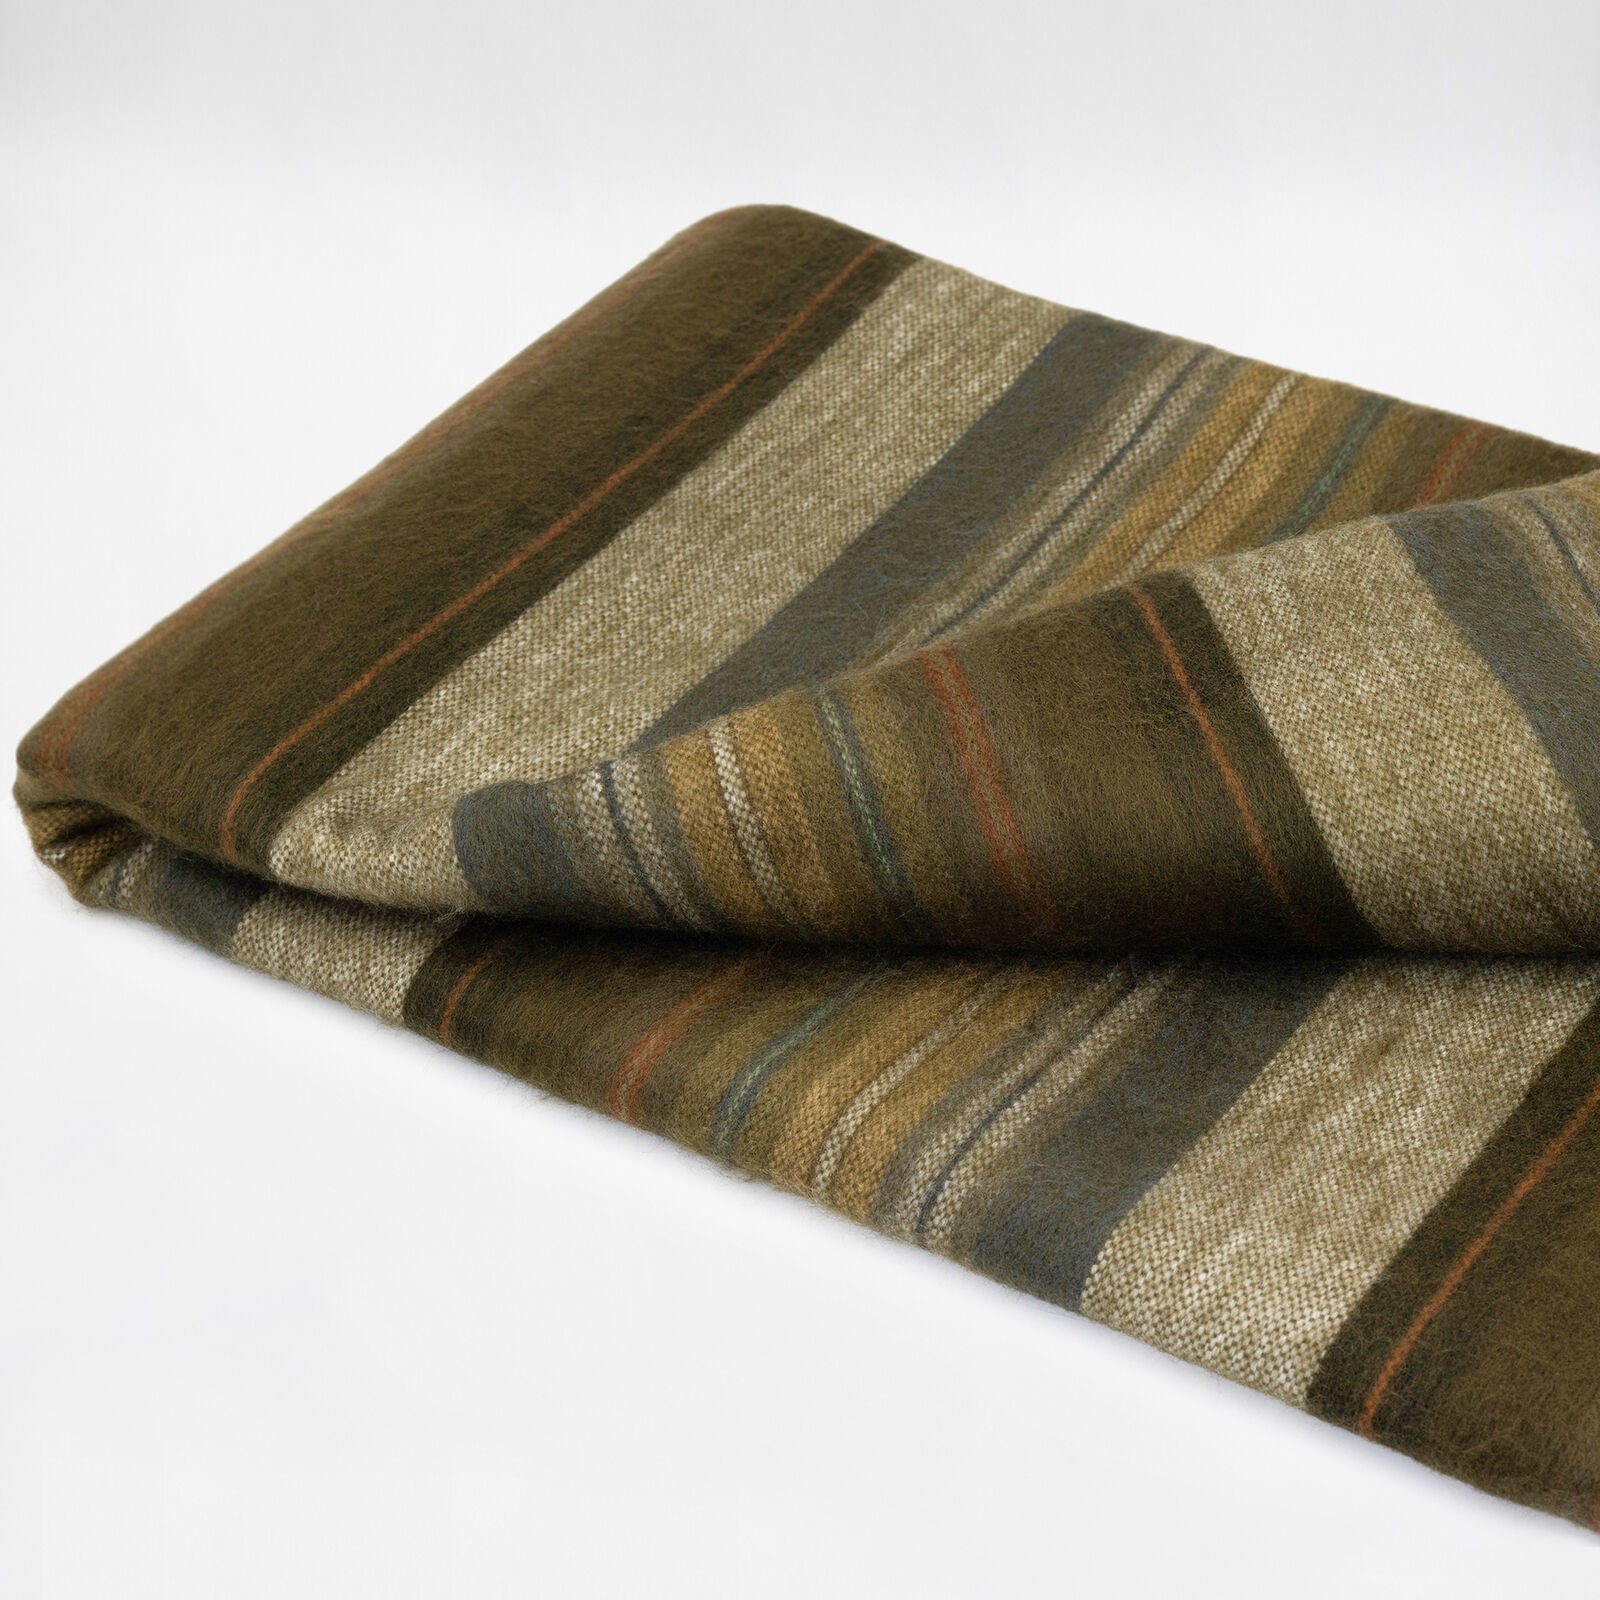 Atocha - Baby Alpaca Wool Throw Blanket / Sofa Cover - Queen 90" x 63" - coffee mix thin stripes pattern